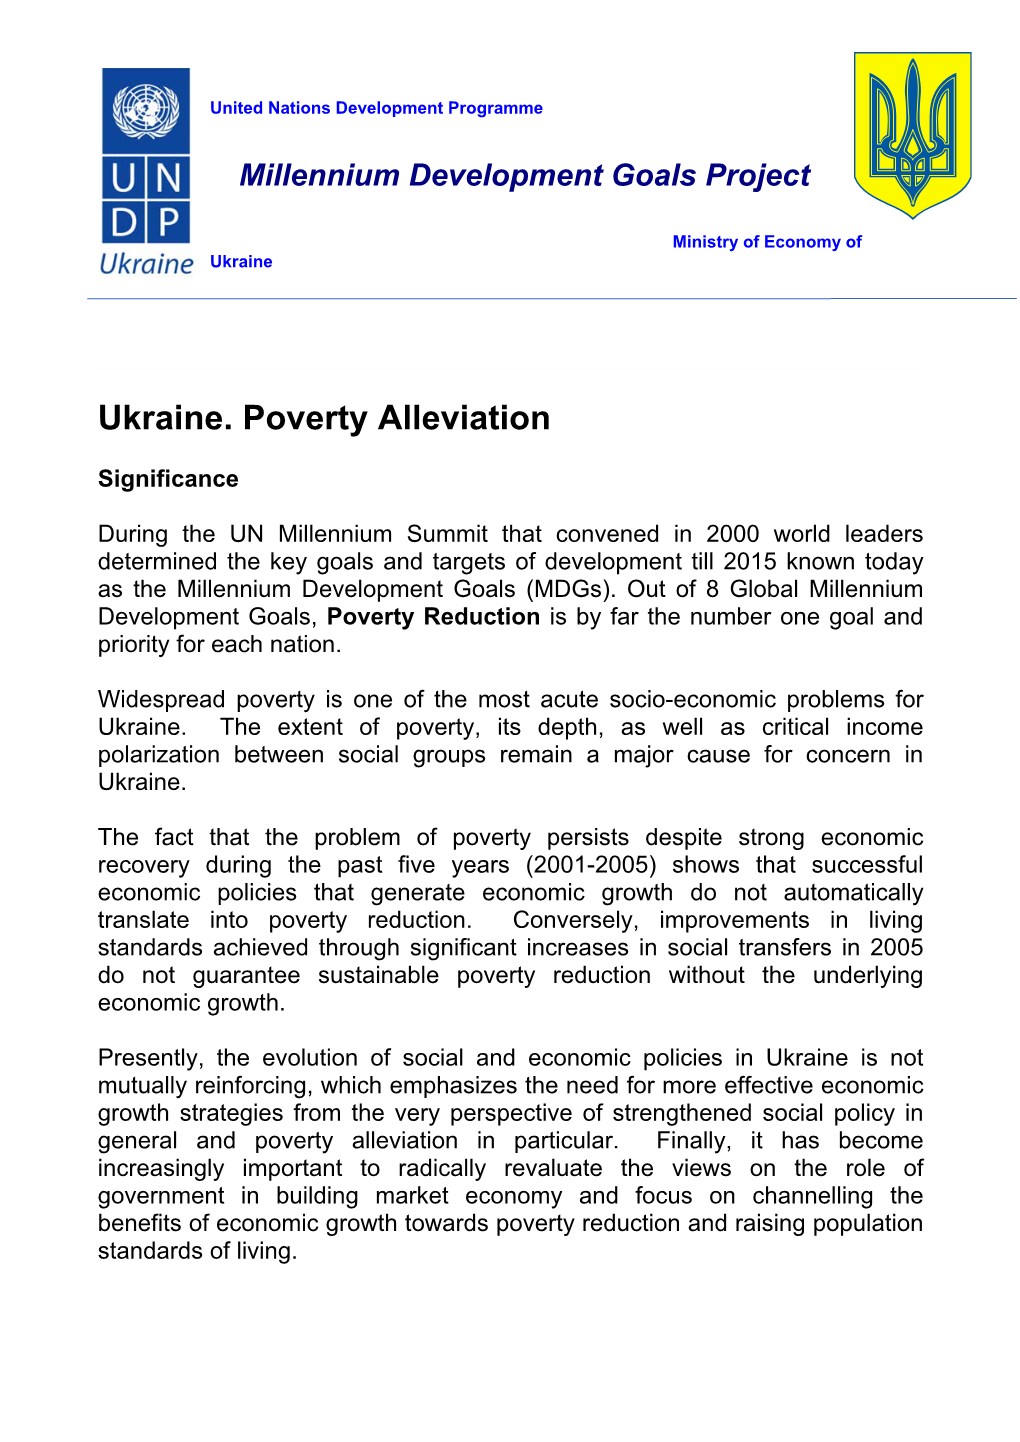 Ukraine. Poverty Alleviation